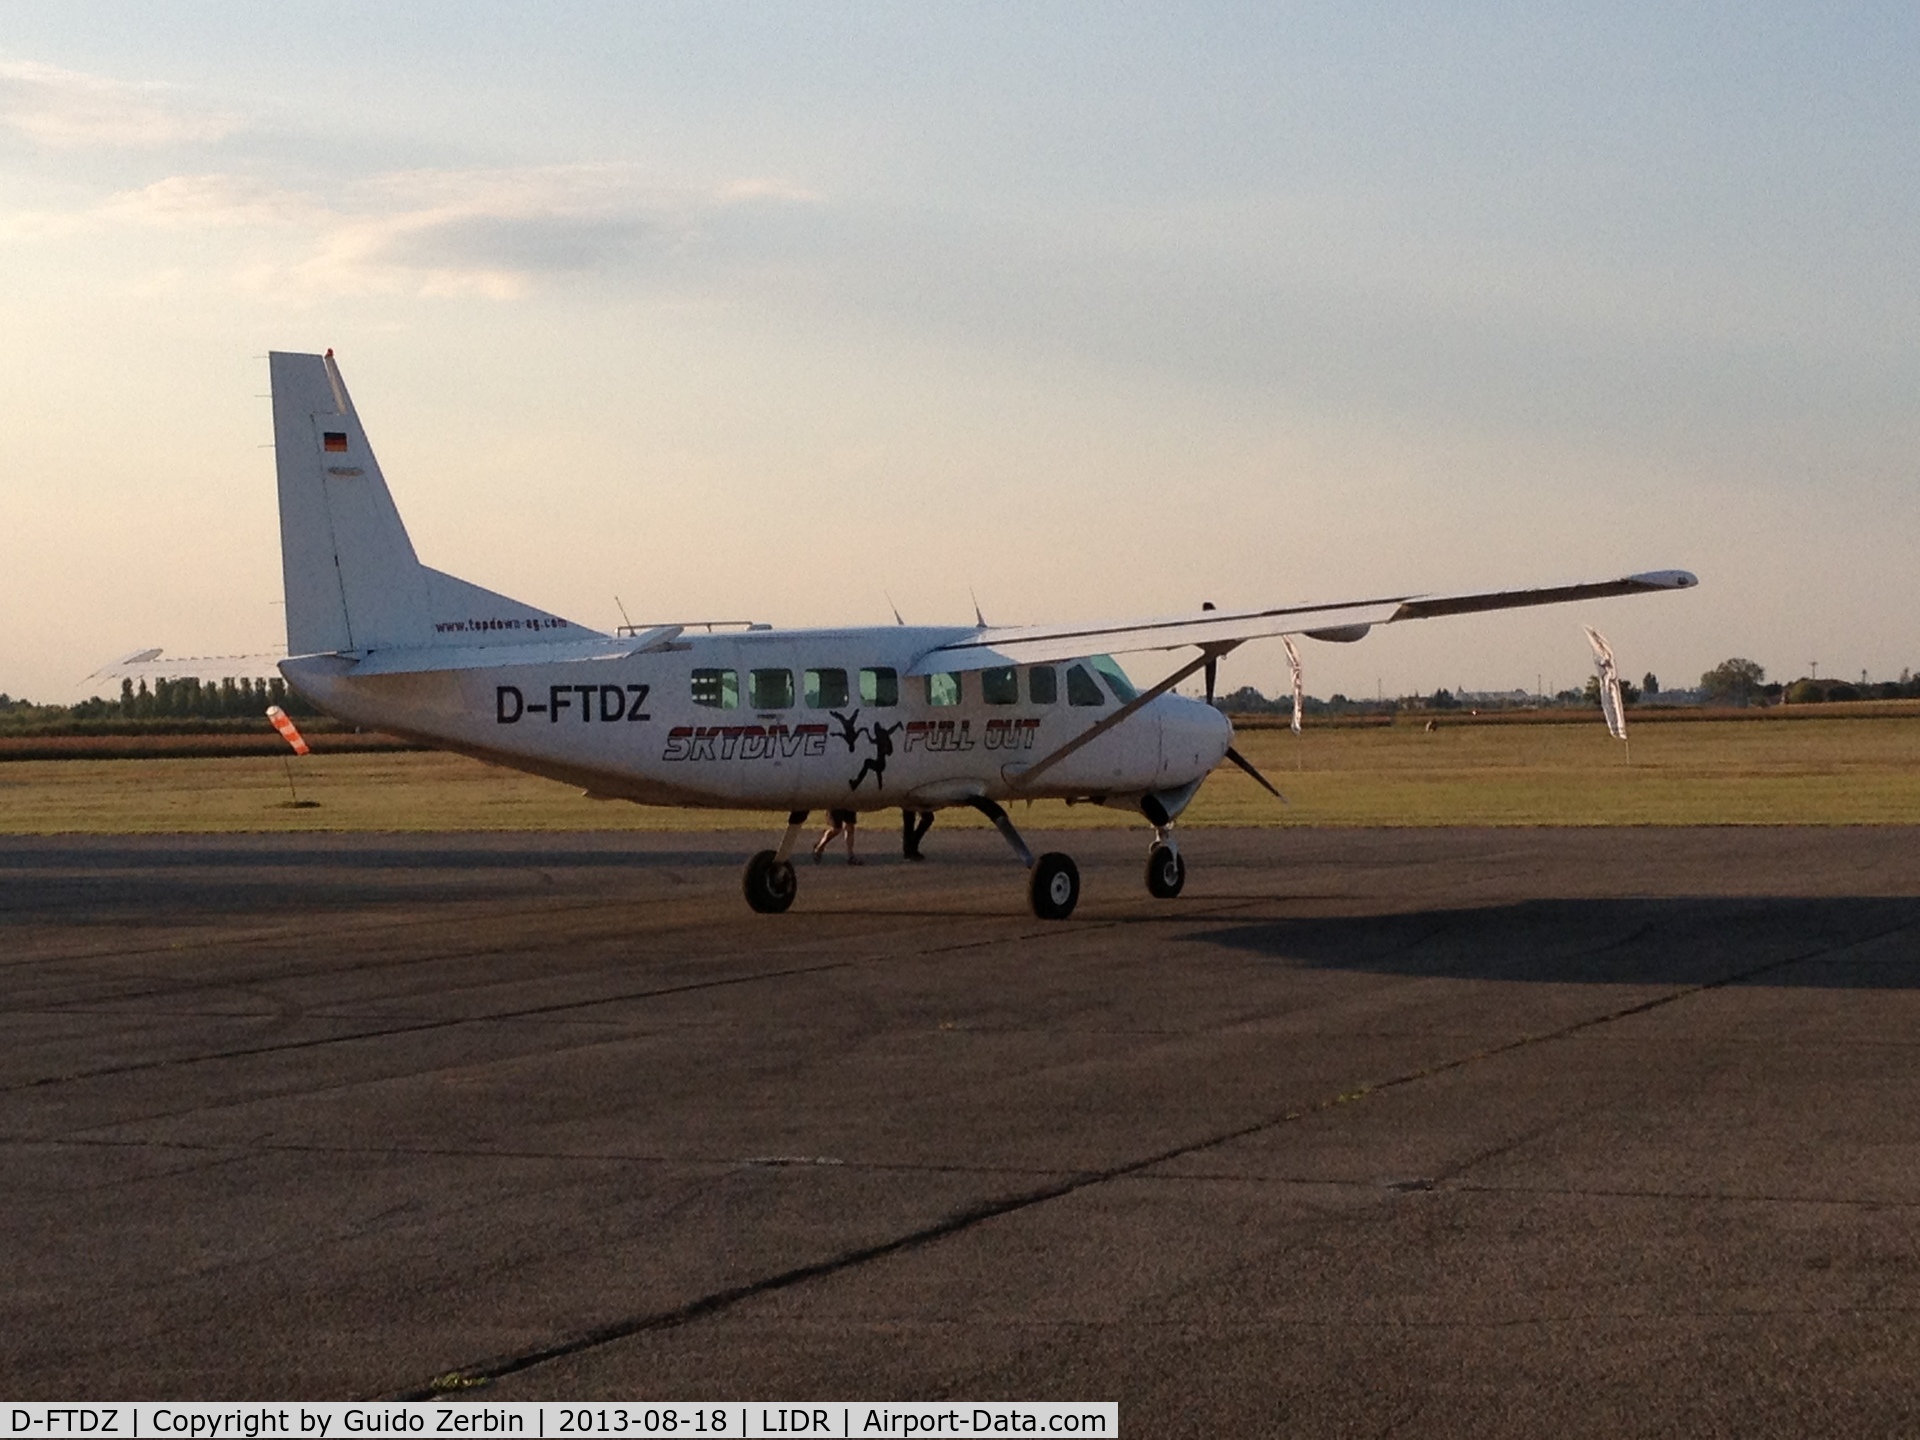 D-FTDZ, 1998 Cessna 208B Grand Caravan C/N 208B-0726, Used for skydive activity in Italy